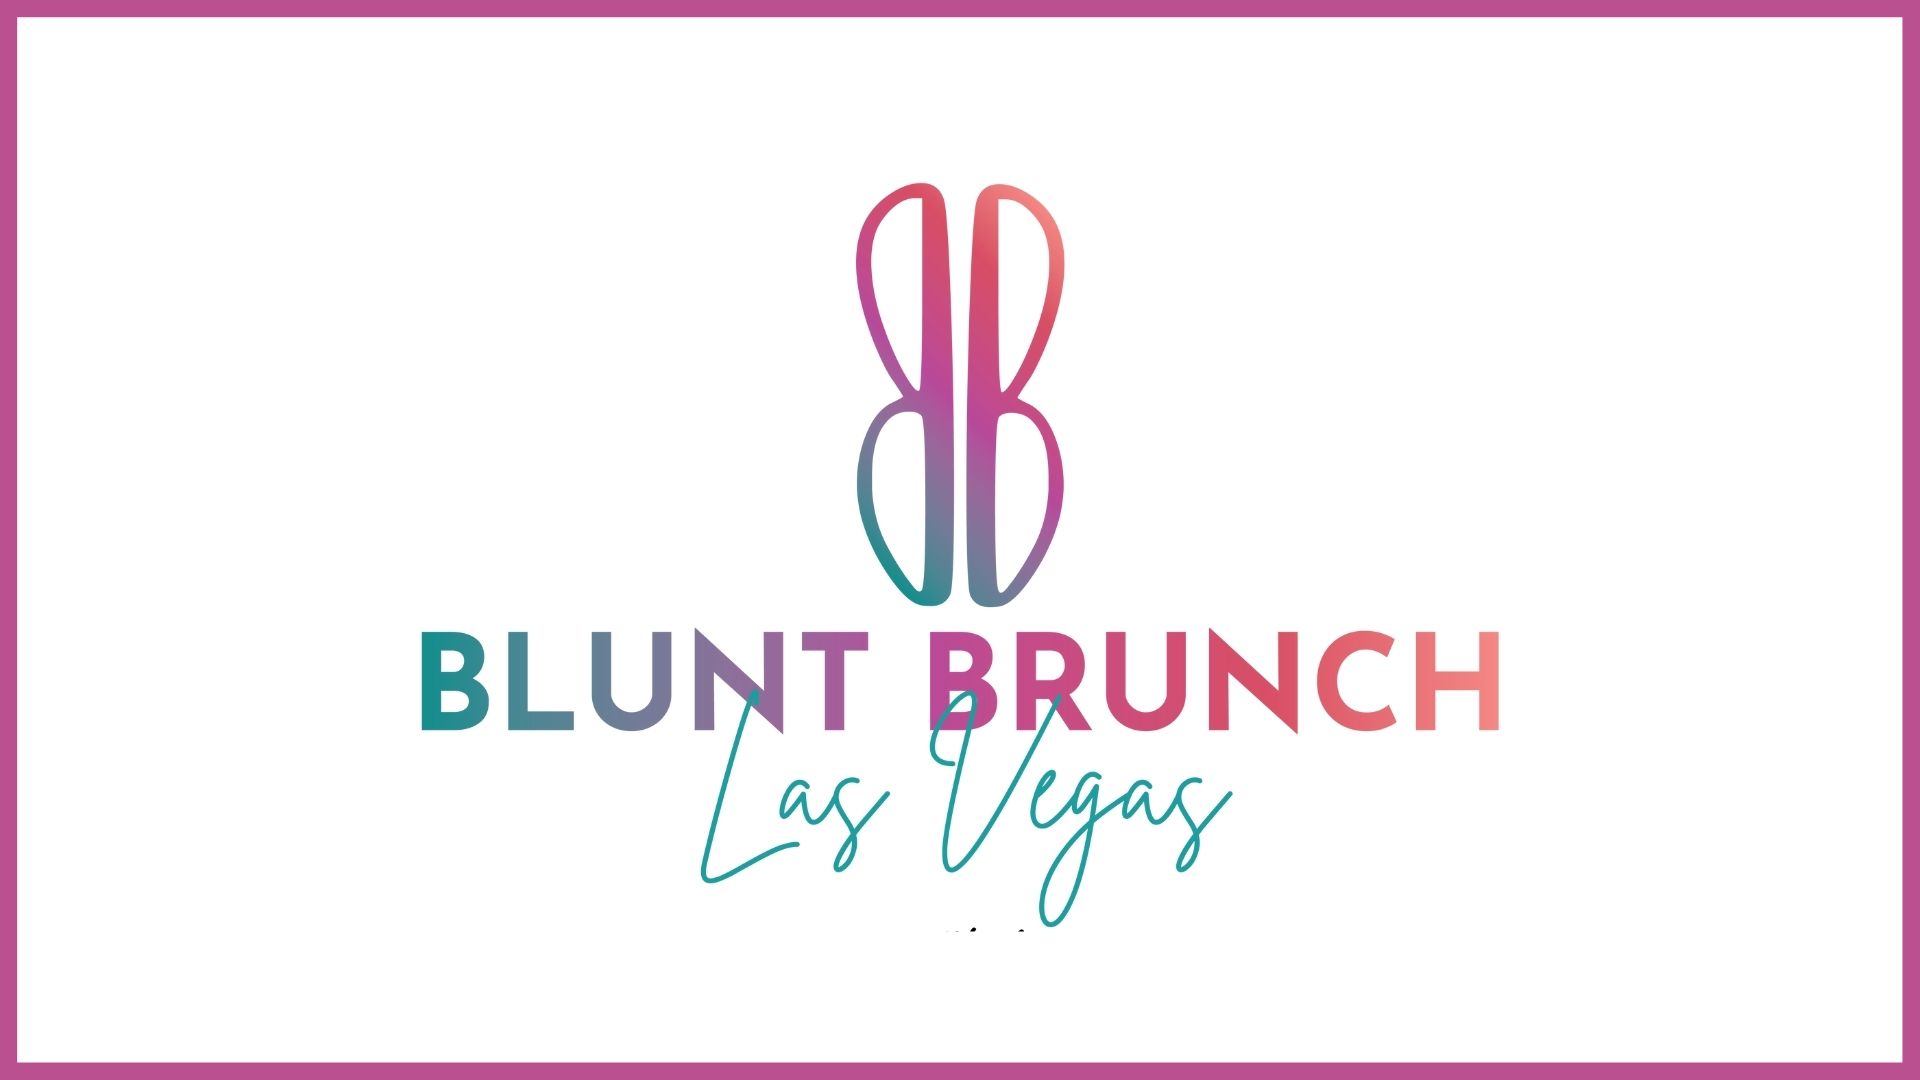 Blunt Brunch Las Vegas